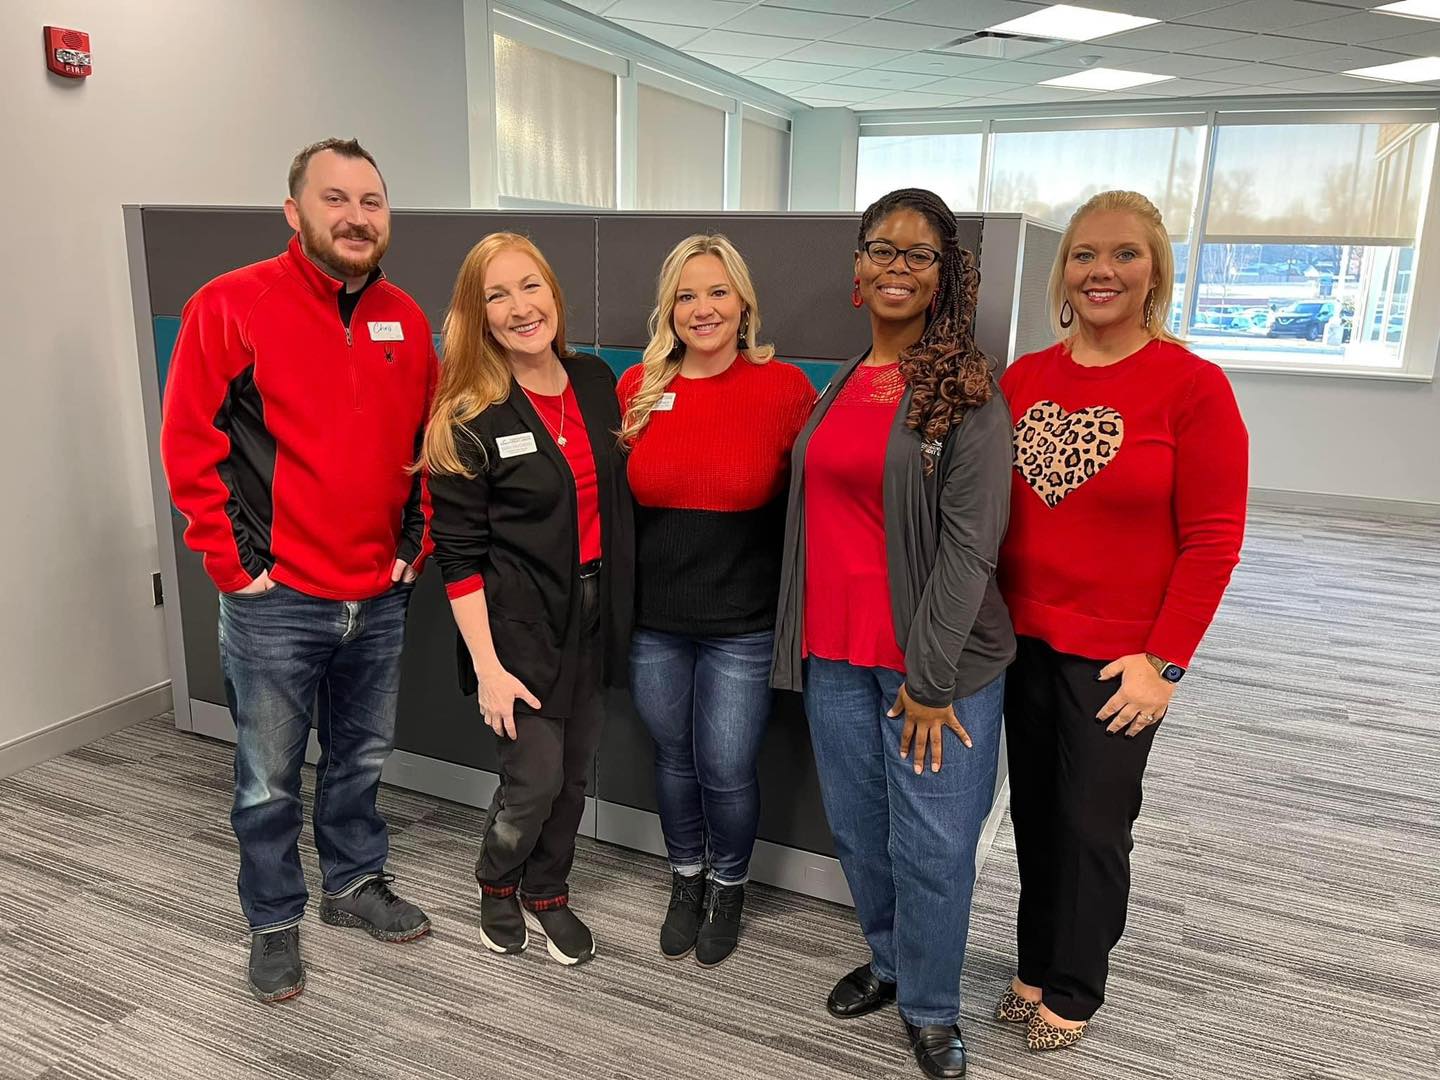 Marketing team wearing red